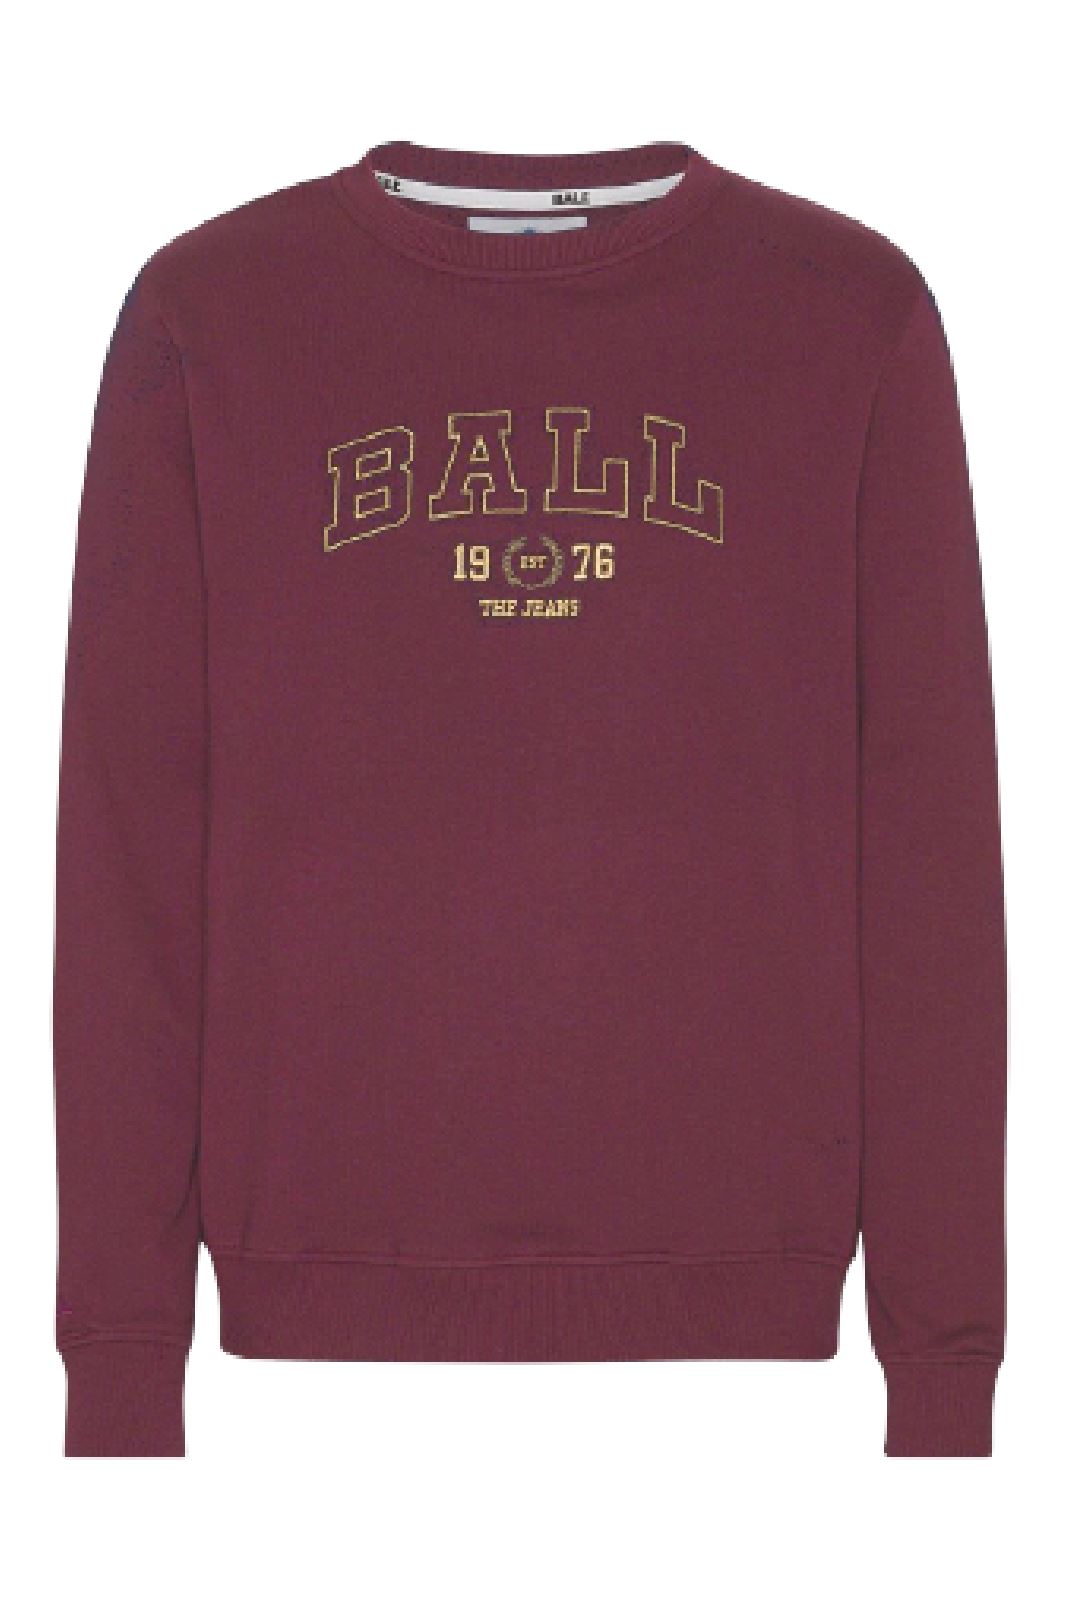 Ball - L. Taylor - Burgundy Sweatshirts 